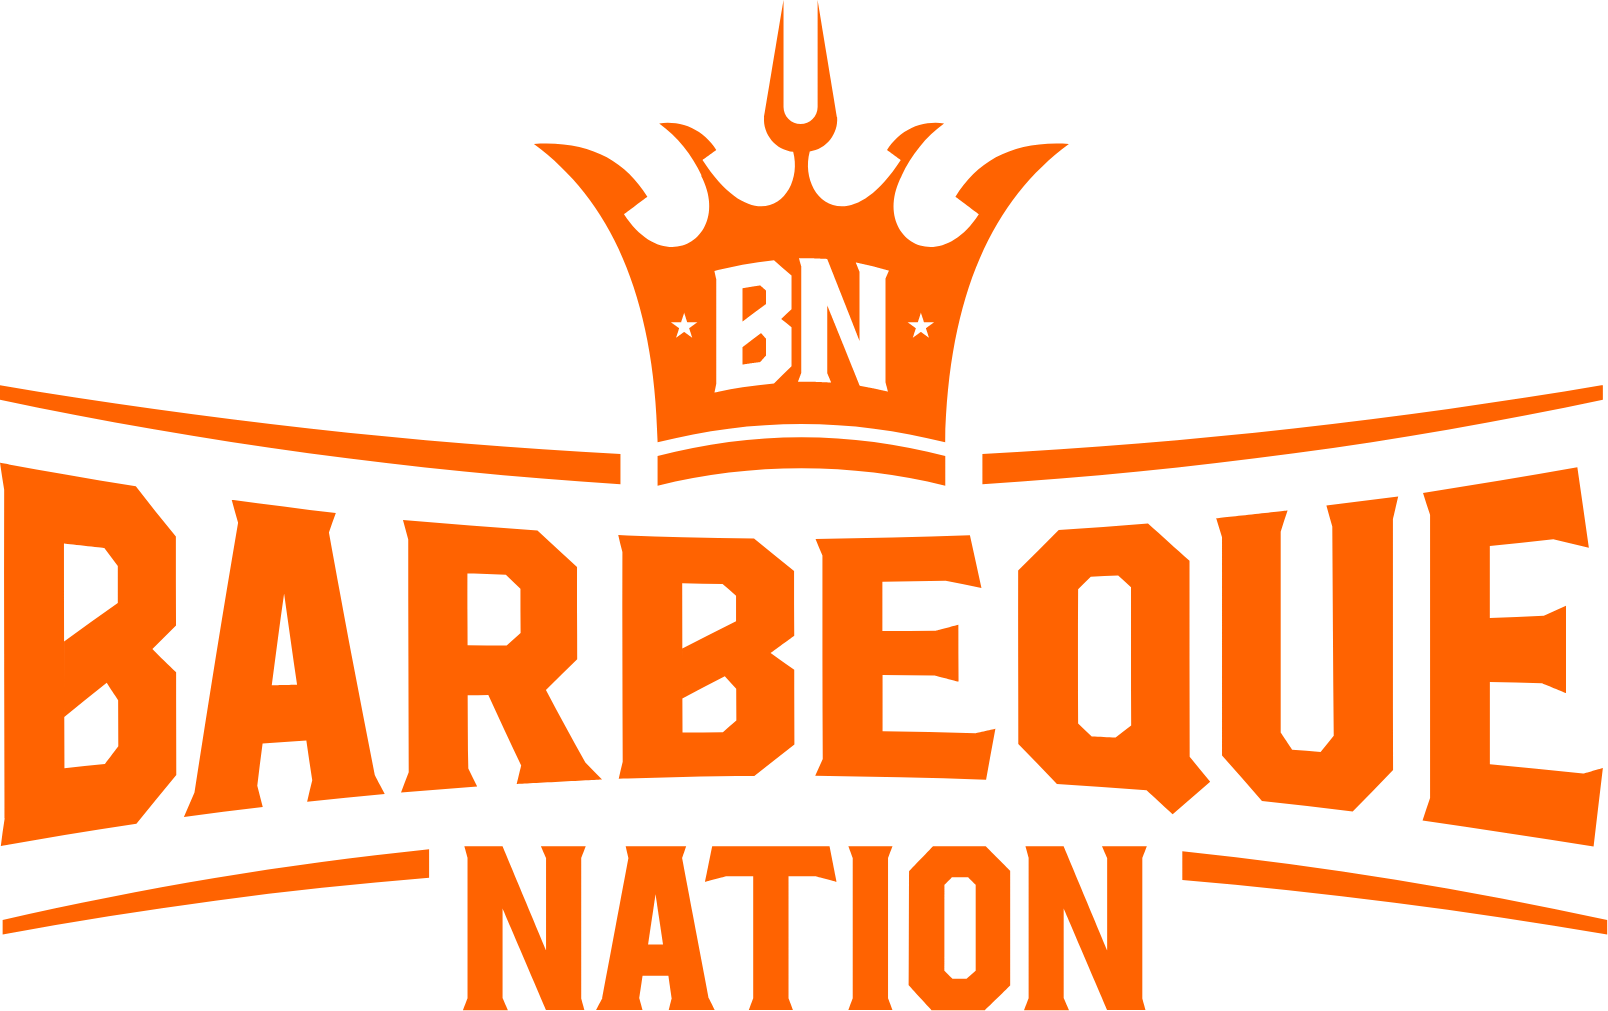 Barbeque Nation Hospitality  logo large (transparent PNG)